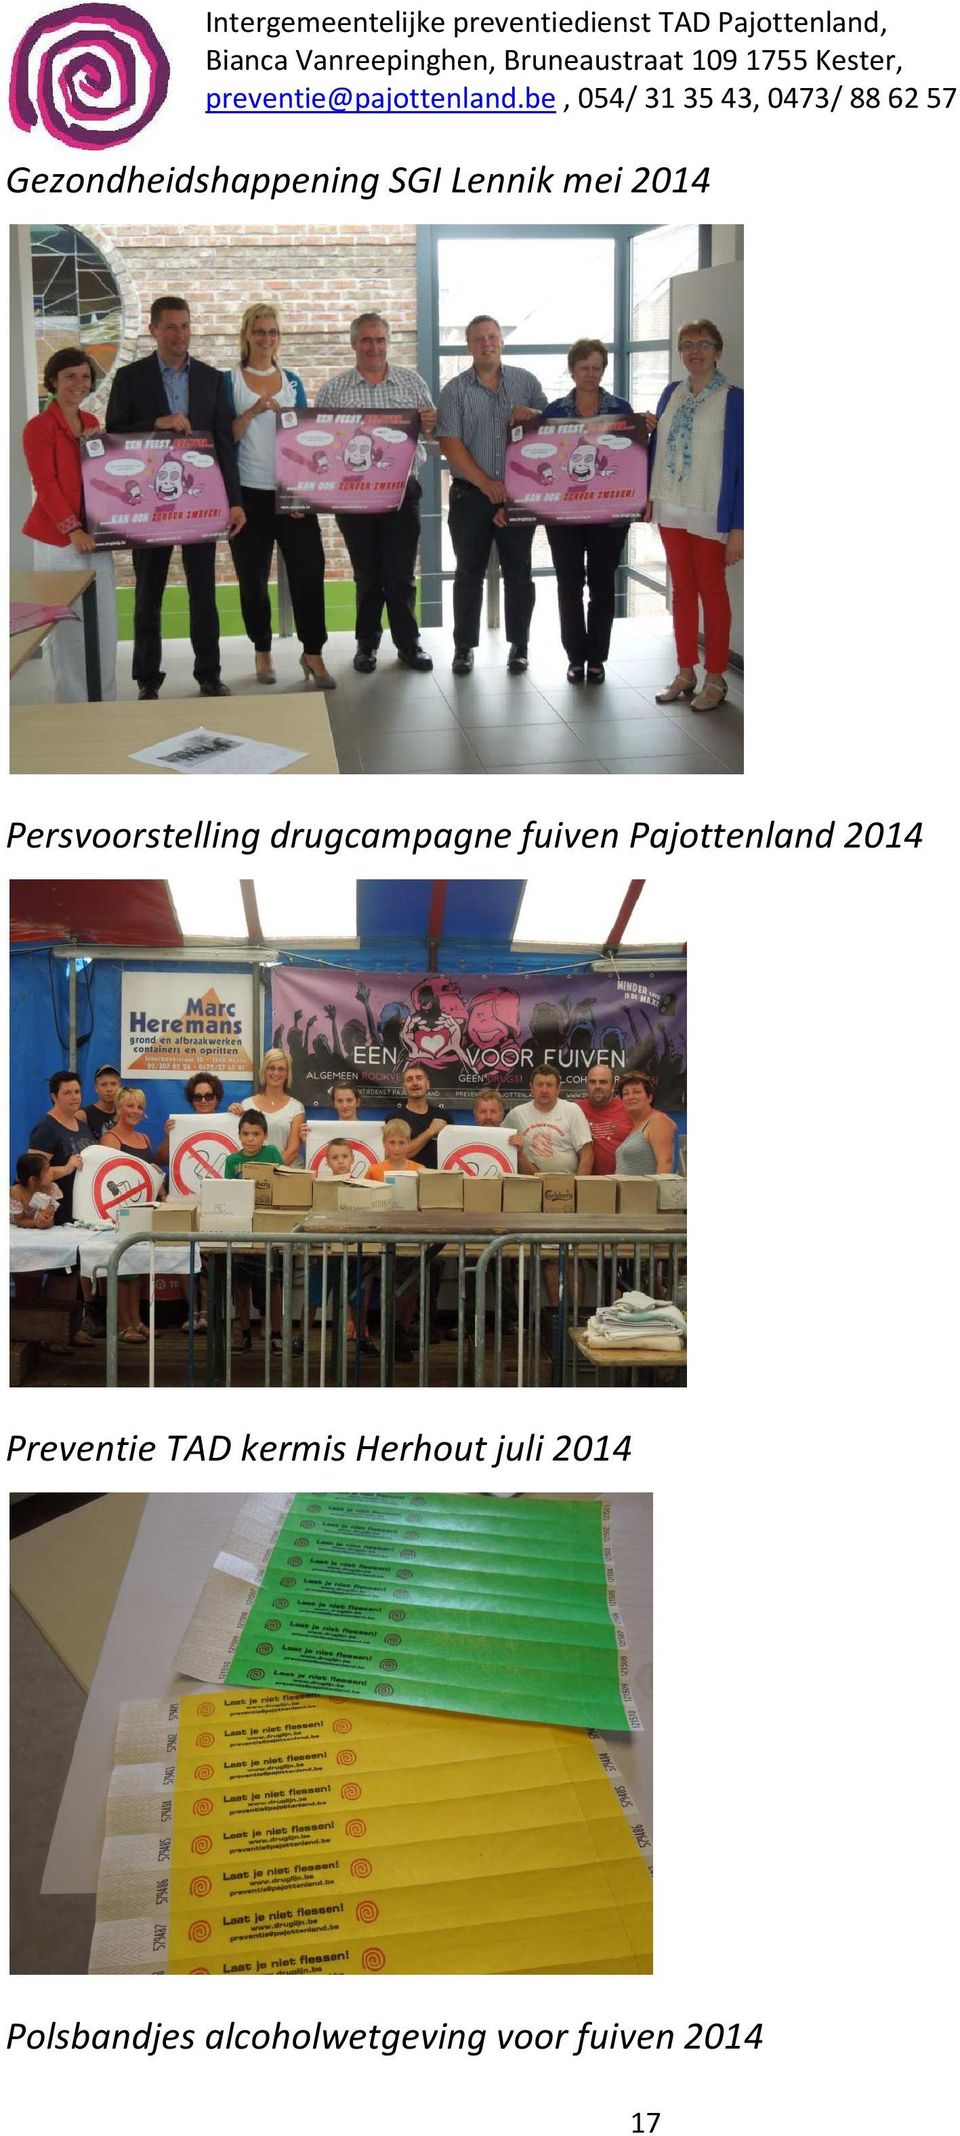 Pajottenland 2014 Preventie TAD kermis